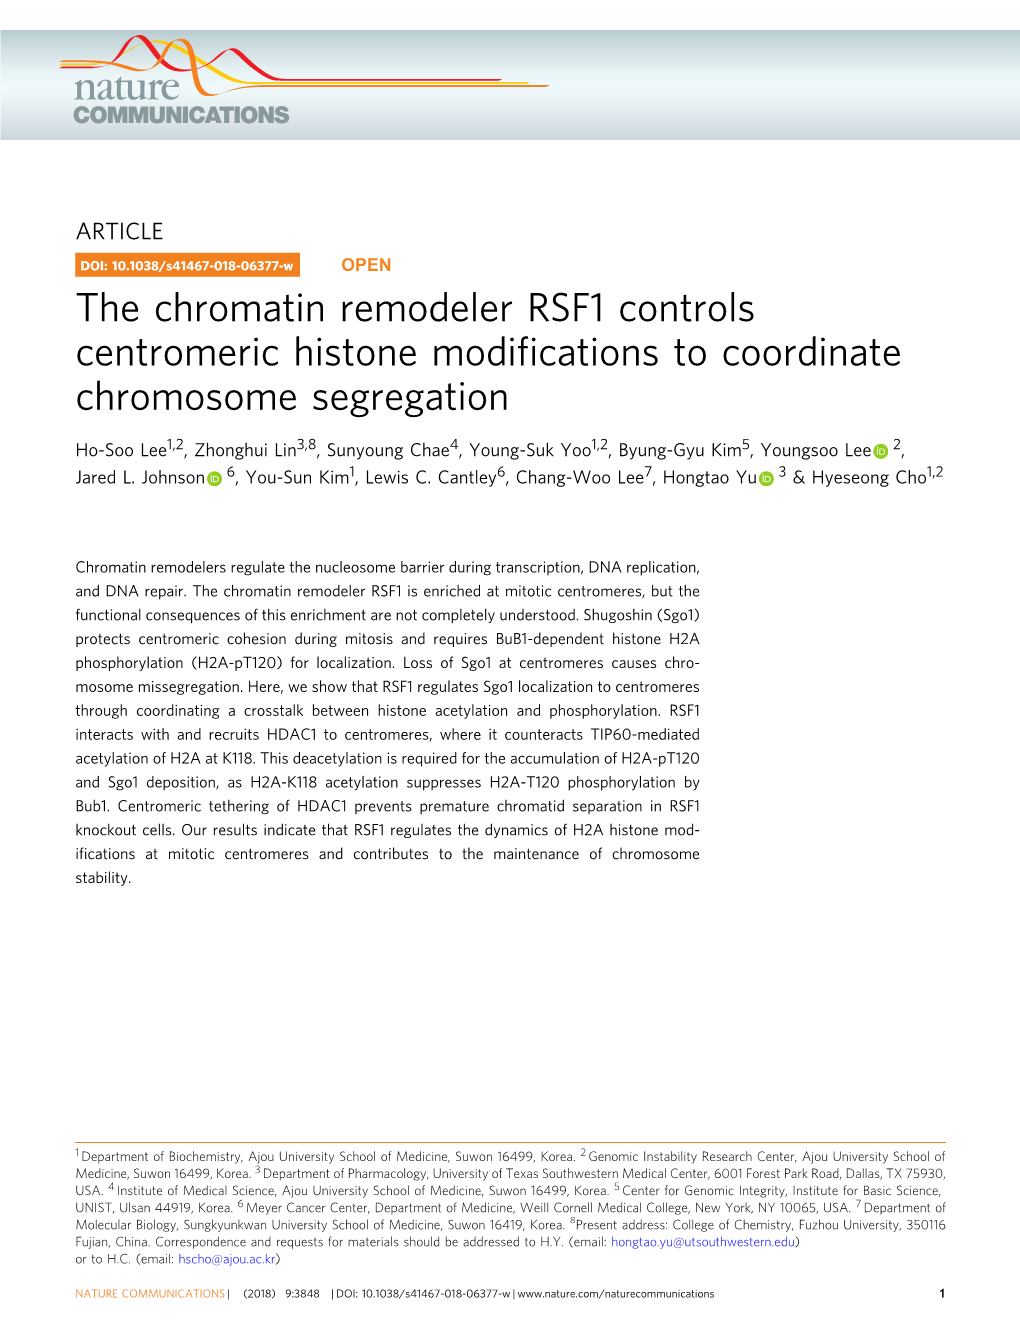 The Chromatin Remodeler RSF1 Controls Centromeric Histone Modiﬁcations to Coordinate Chromosome Segregation